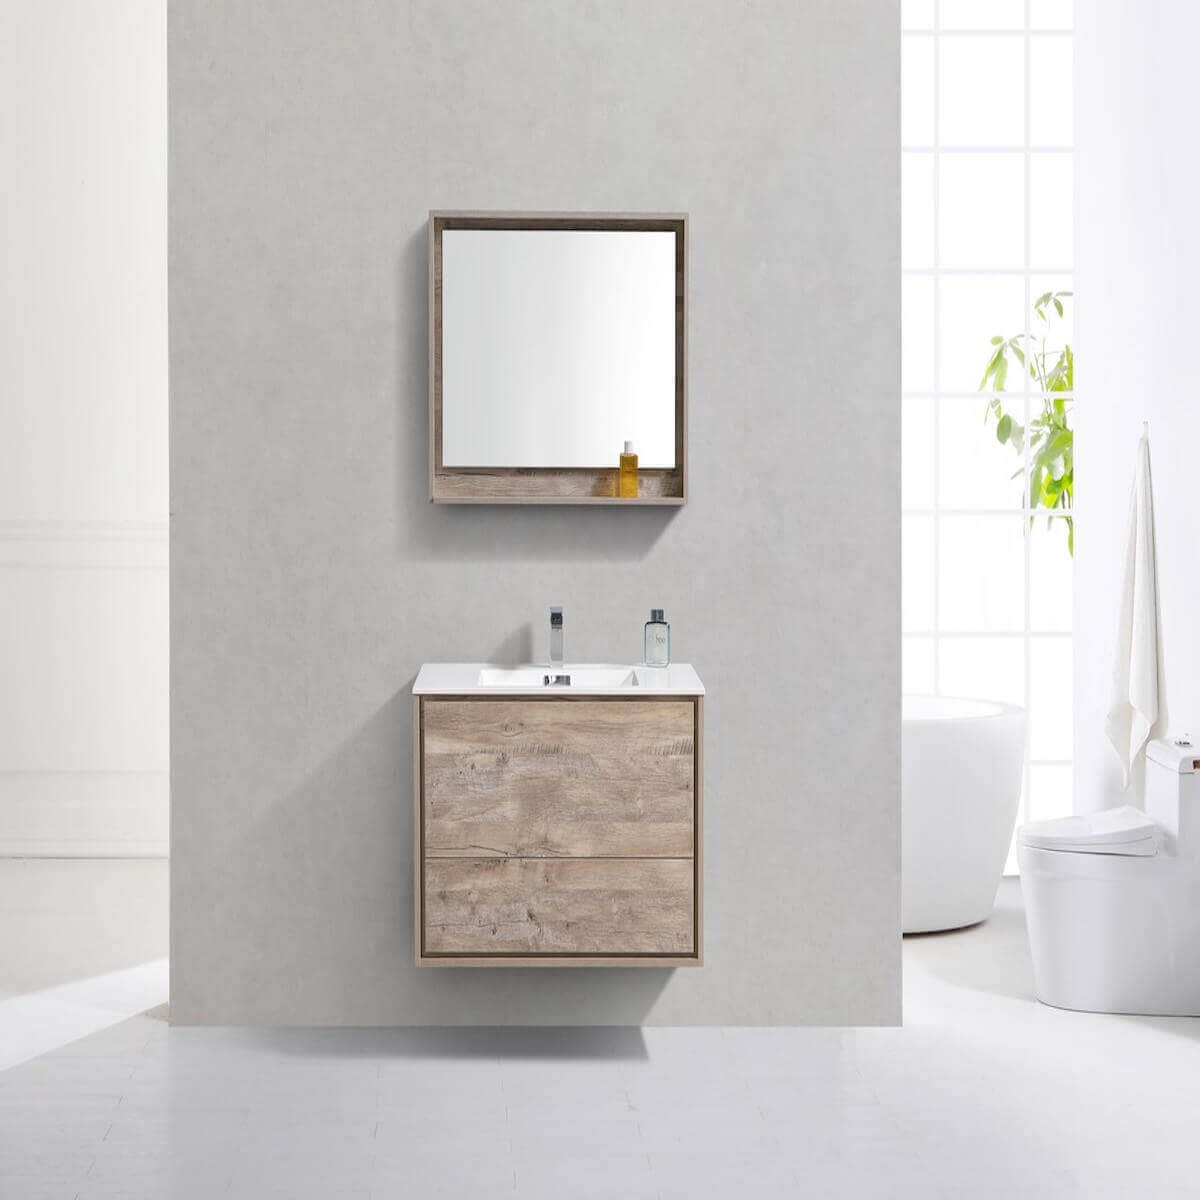 KubeBath DeLusso 36" Nature Wood Wall Mount Single Vanity DL36-NW in Bathroom #finish_nature wood